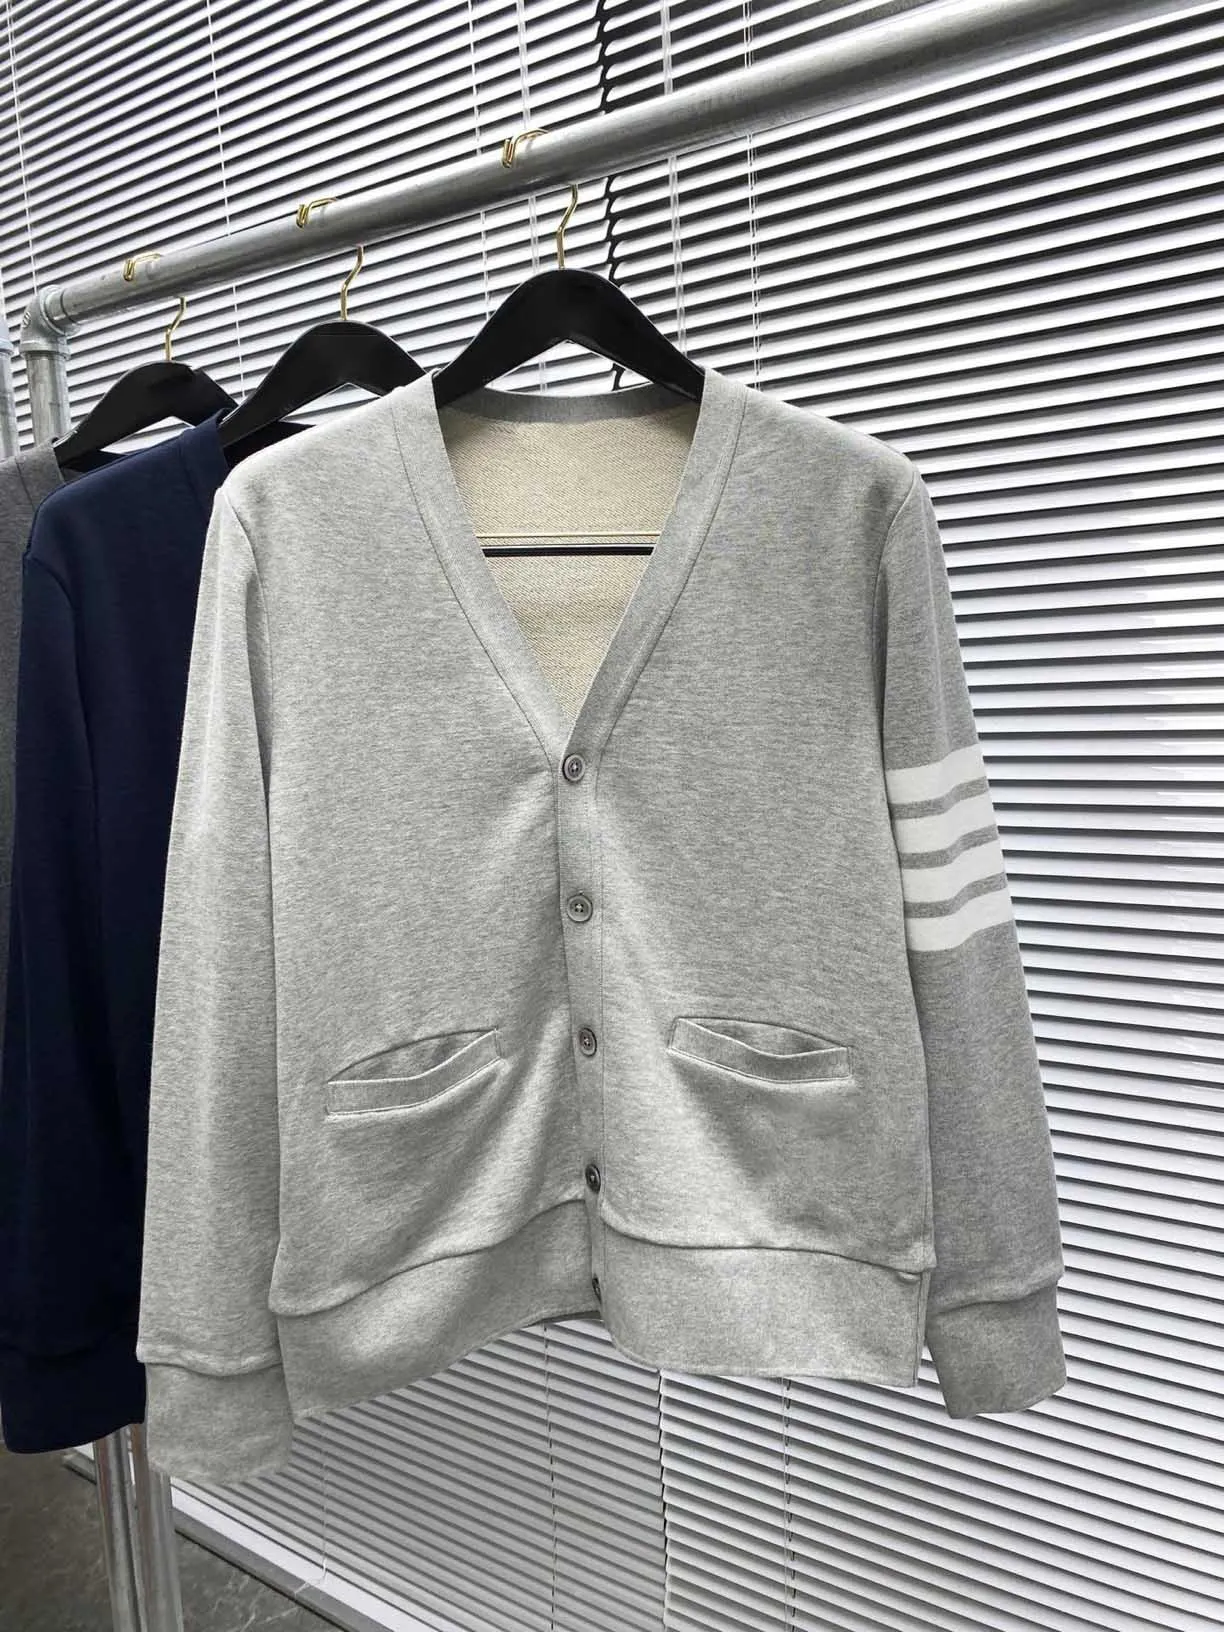 TB THOM Men's Sweatshirt Korean Fashion Brand Coats White 4-bar Stripes V-Neck Cardigan Sweatshirts Casual Streetwear Sweaters